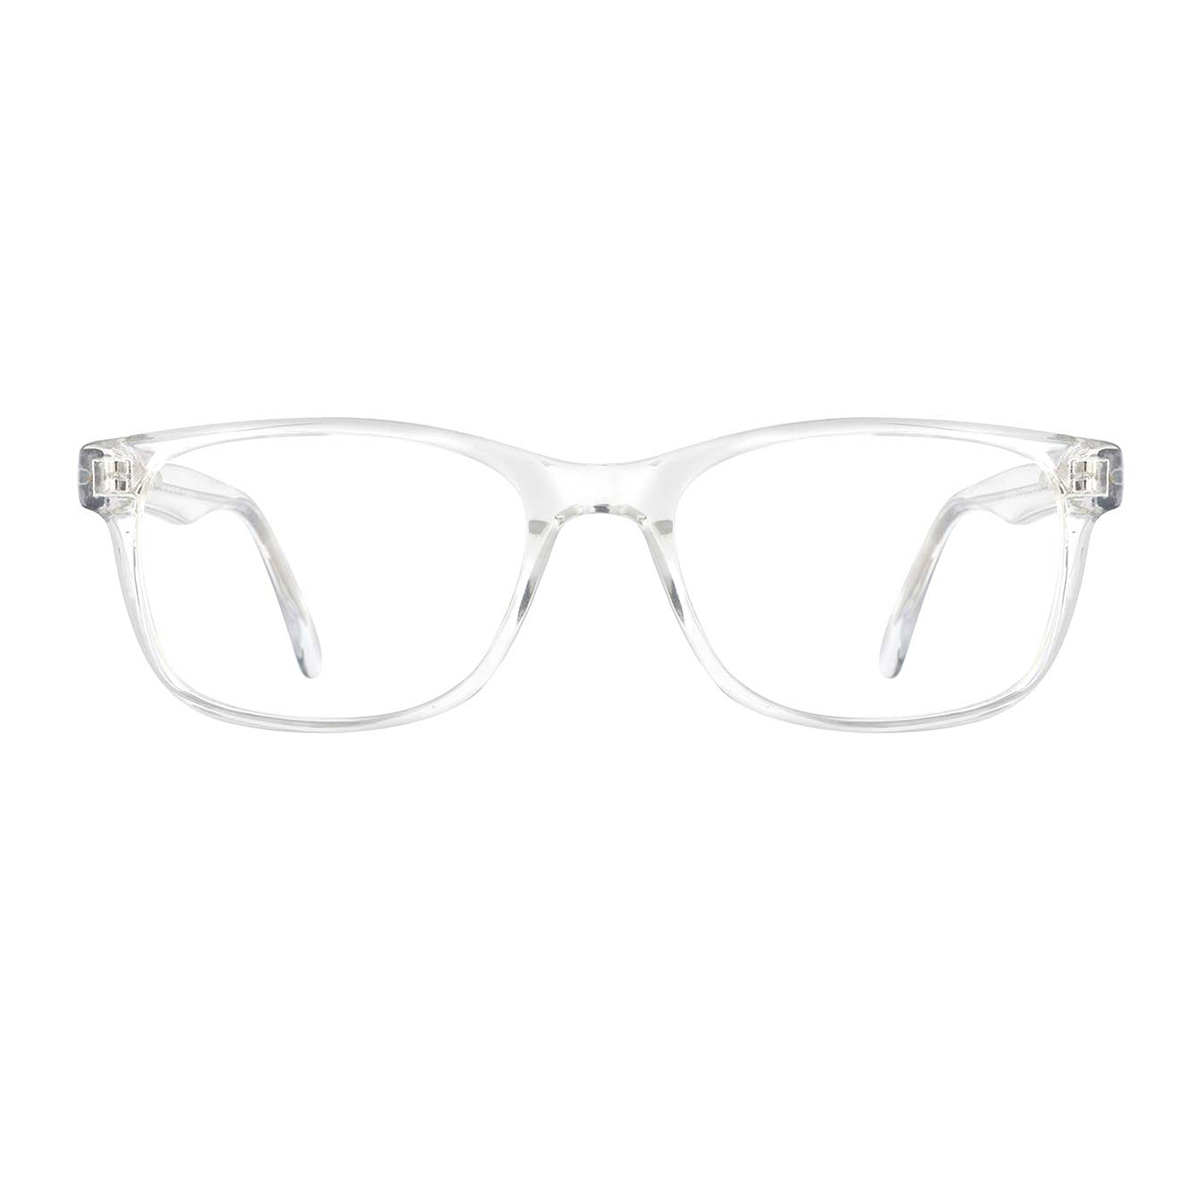 rectangle transparent eyeglasses